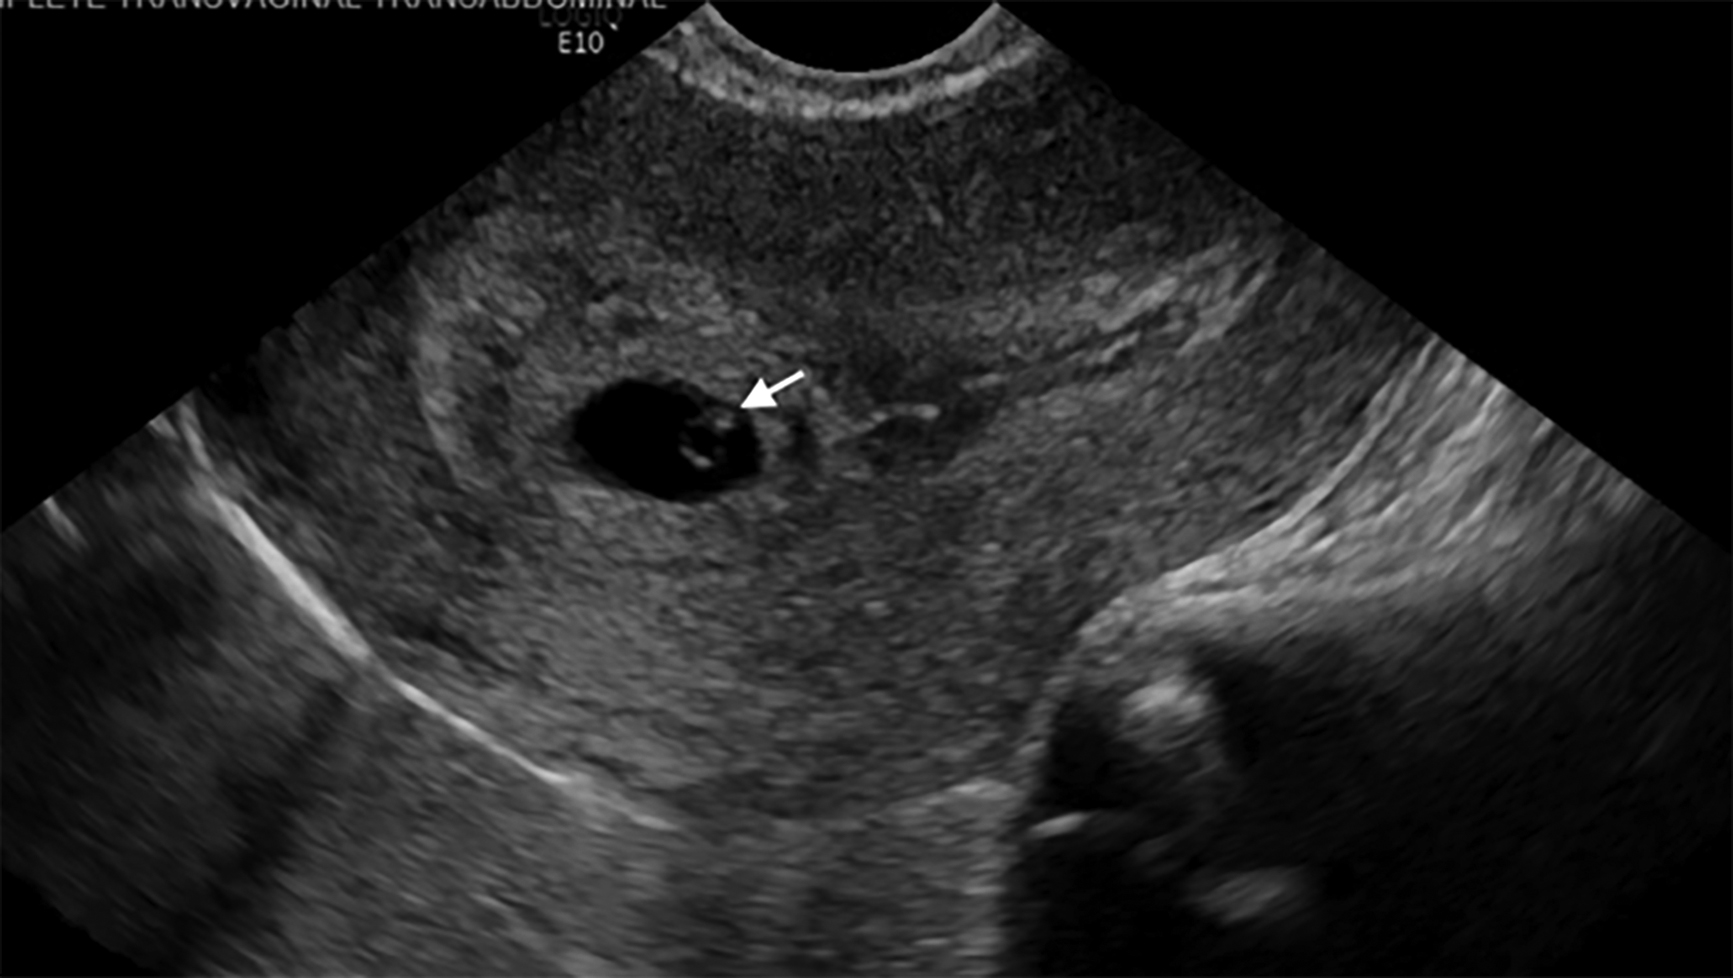 Intrauterine gestational sac with a yolk sac